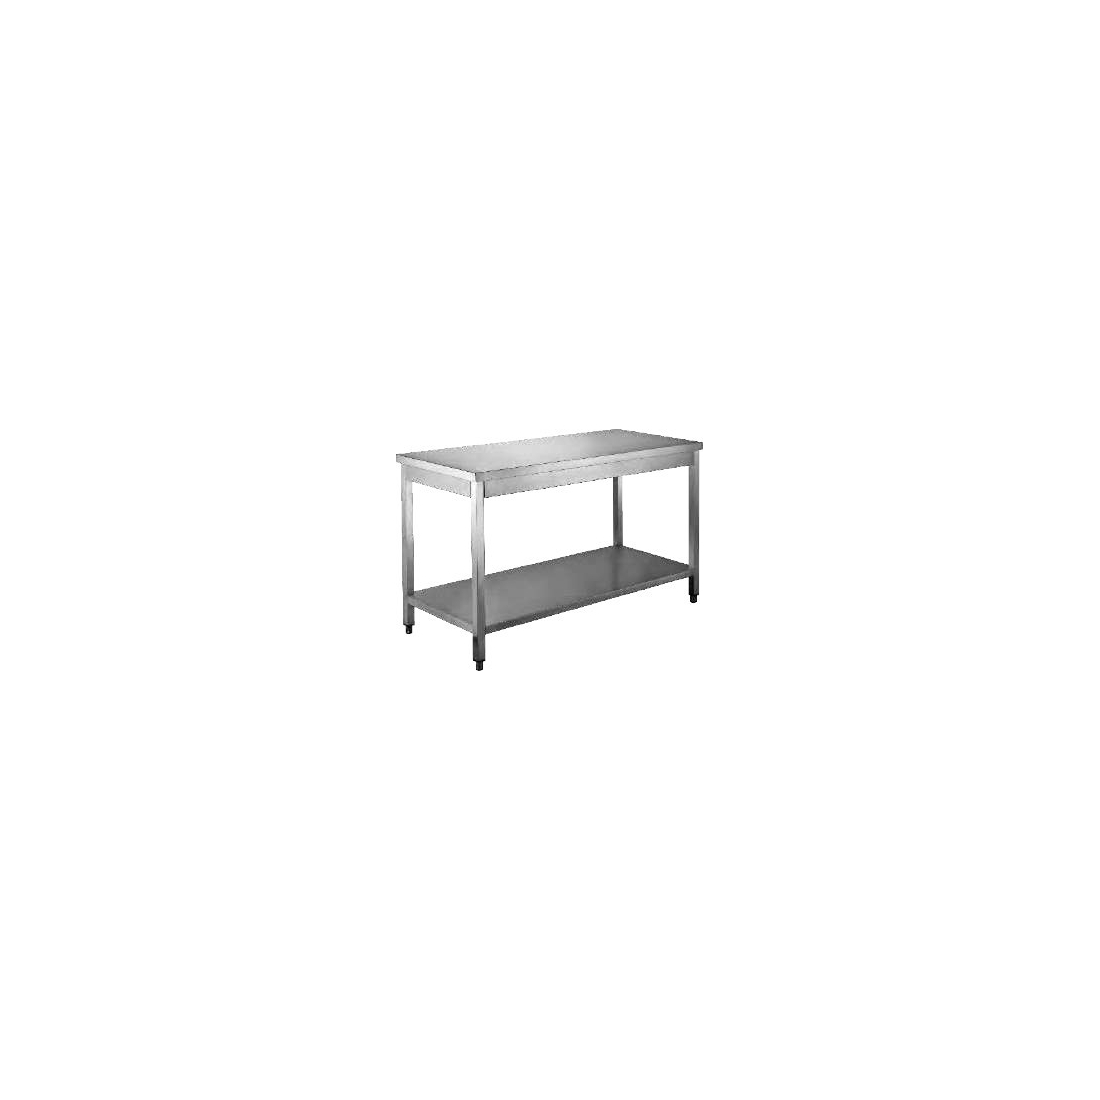 Stainless Steel Service Table - undershelf  1.5m (WTD-152)|mkayn|مكاين